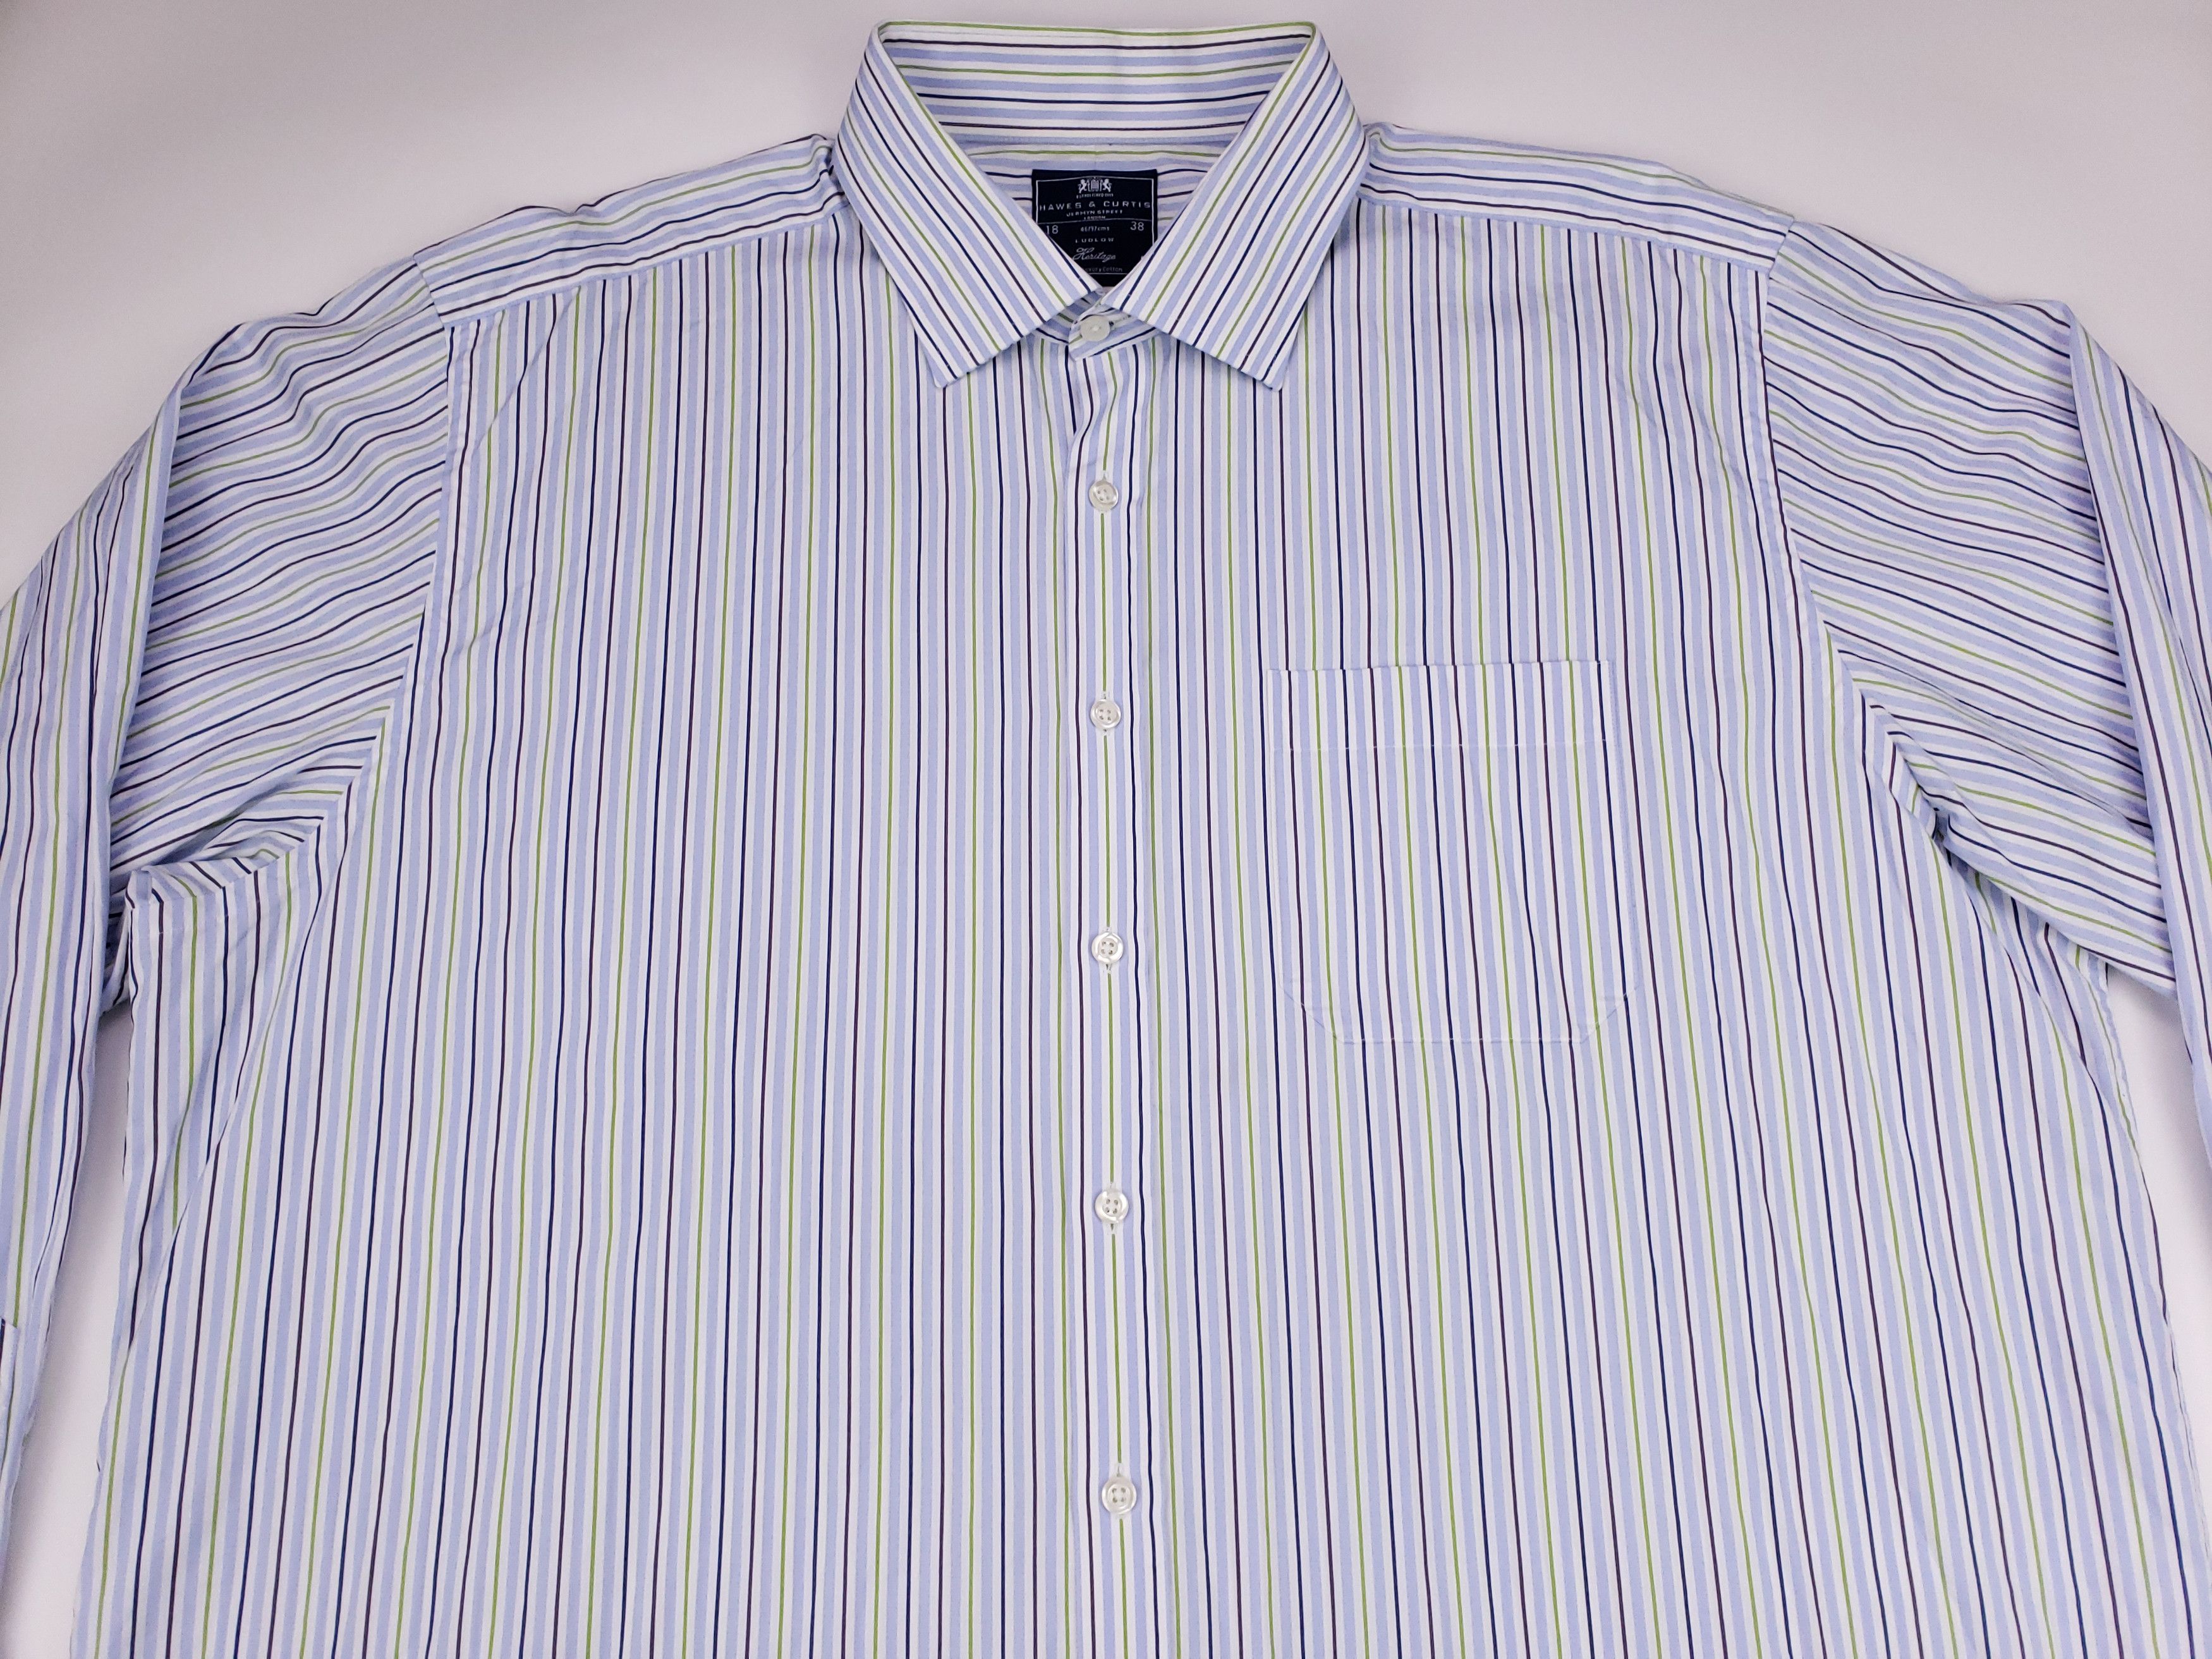 Hawes&Curtis Hawes Curtis Dress Shirt 18 38 Ludlow Striped Mens Size Blu Size US XXL / EU 58 / 5 - 9 Thumbnail